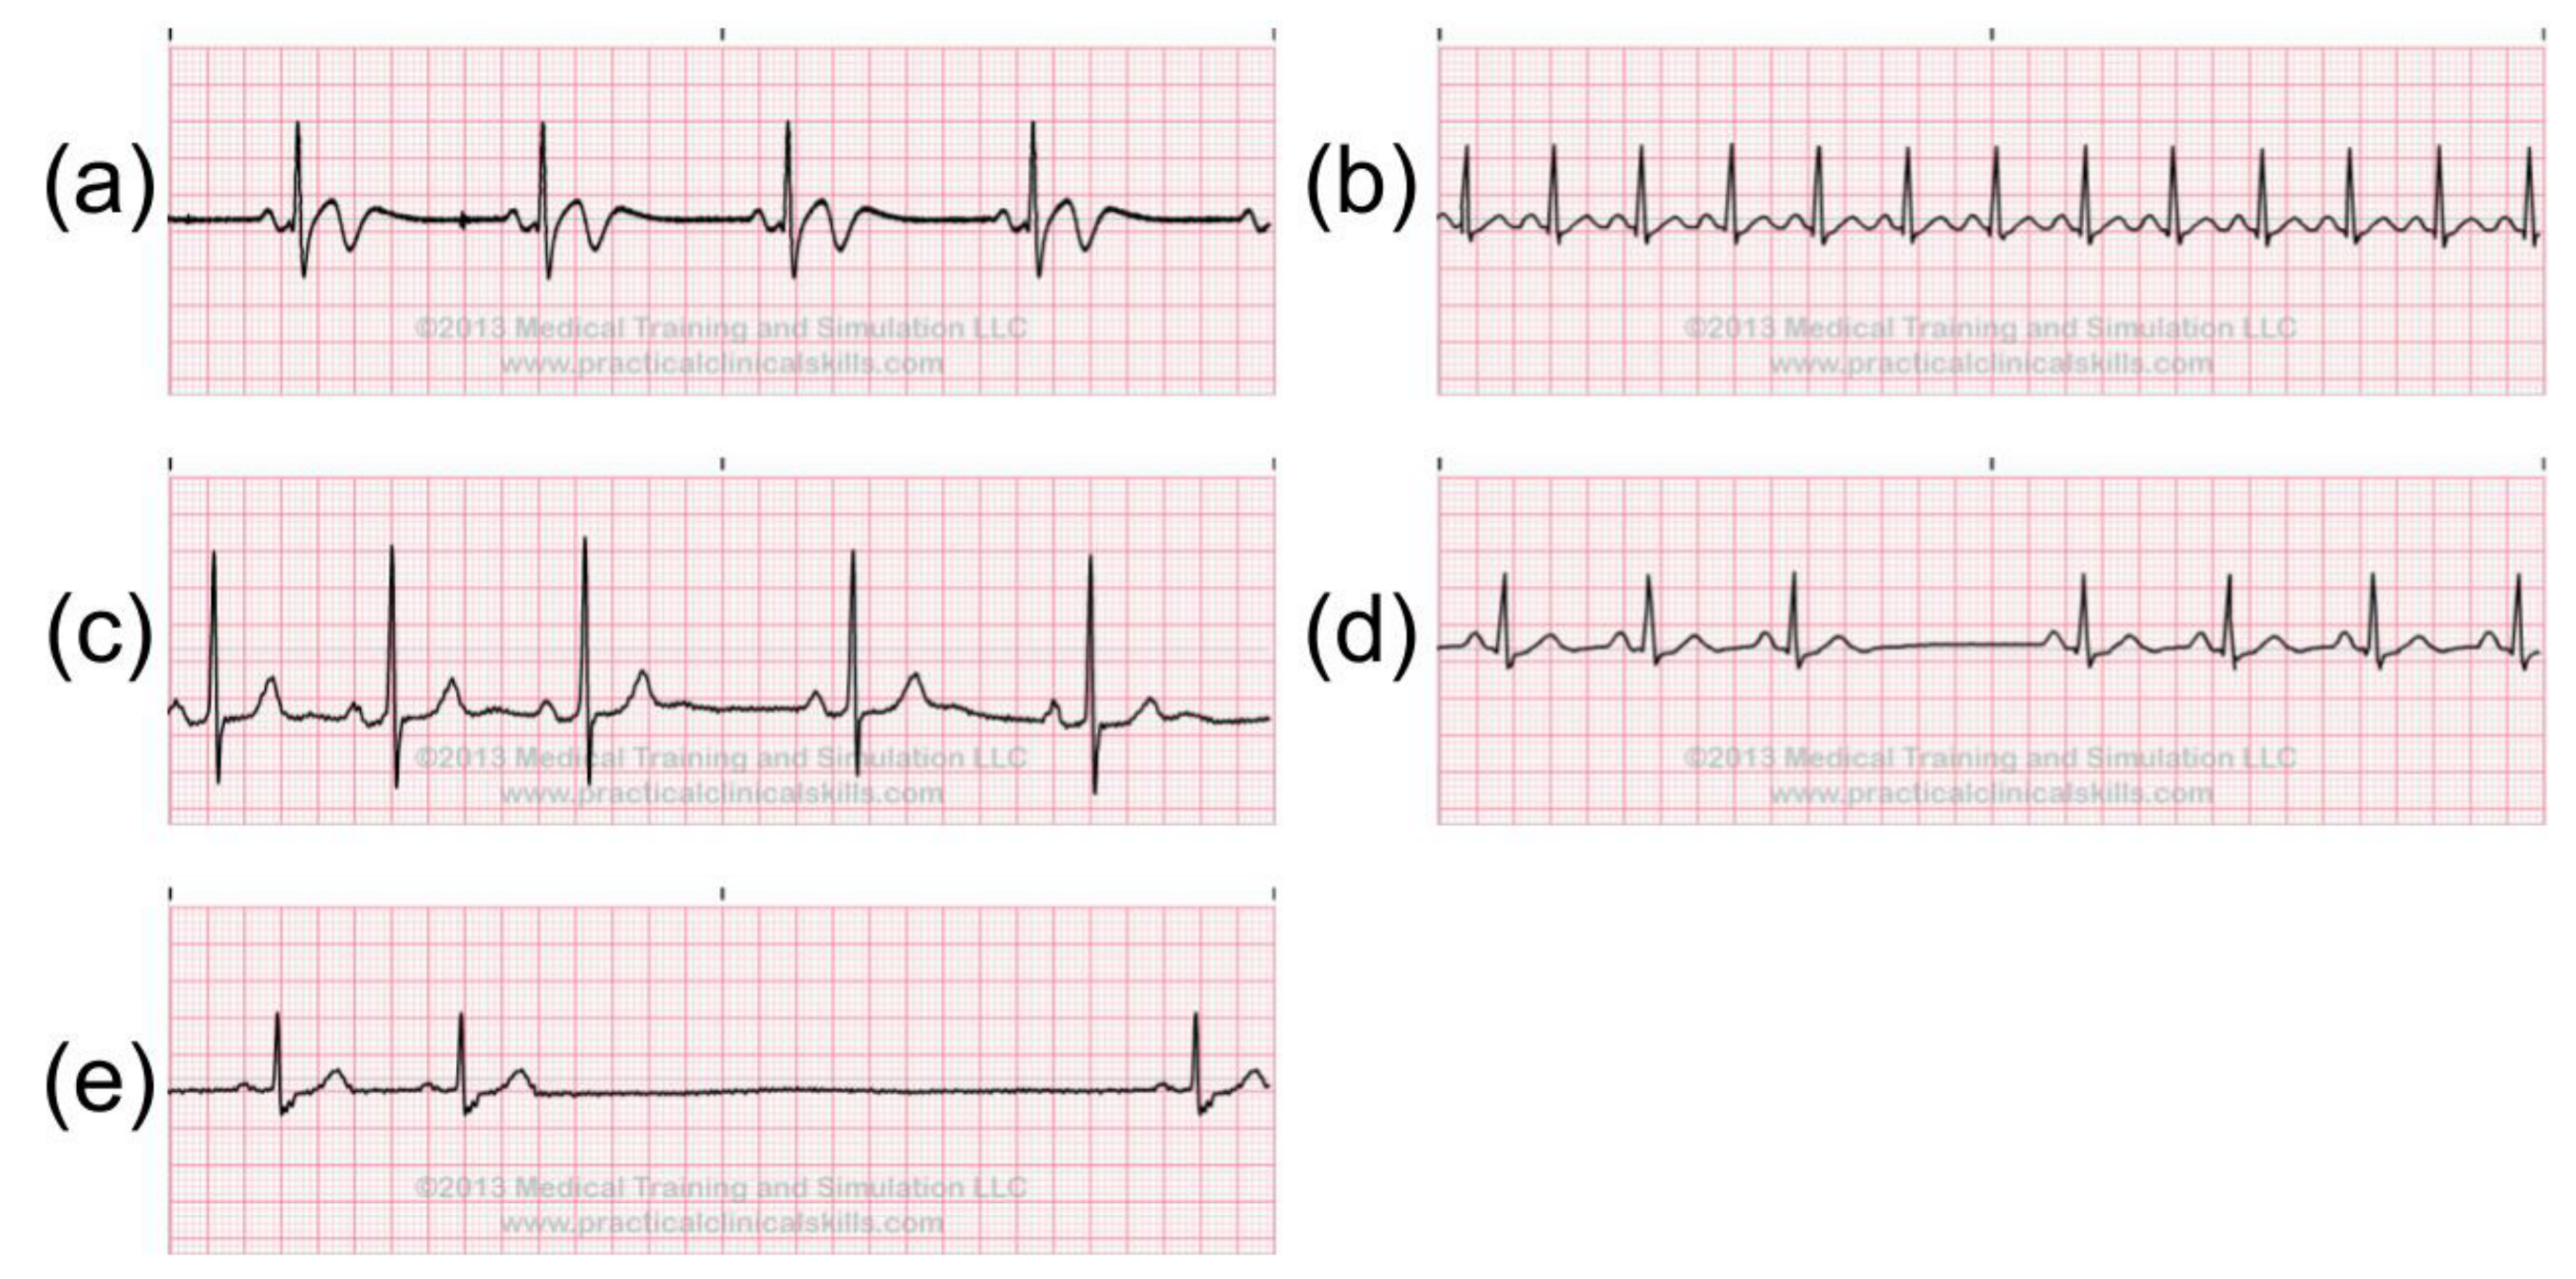 Sensors Free Full Text A Survey Of Heart Anomaly Detection Using Ambulatory Electrocardiogram Ecg Html